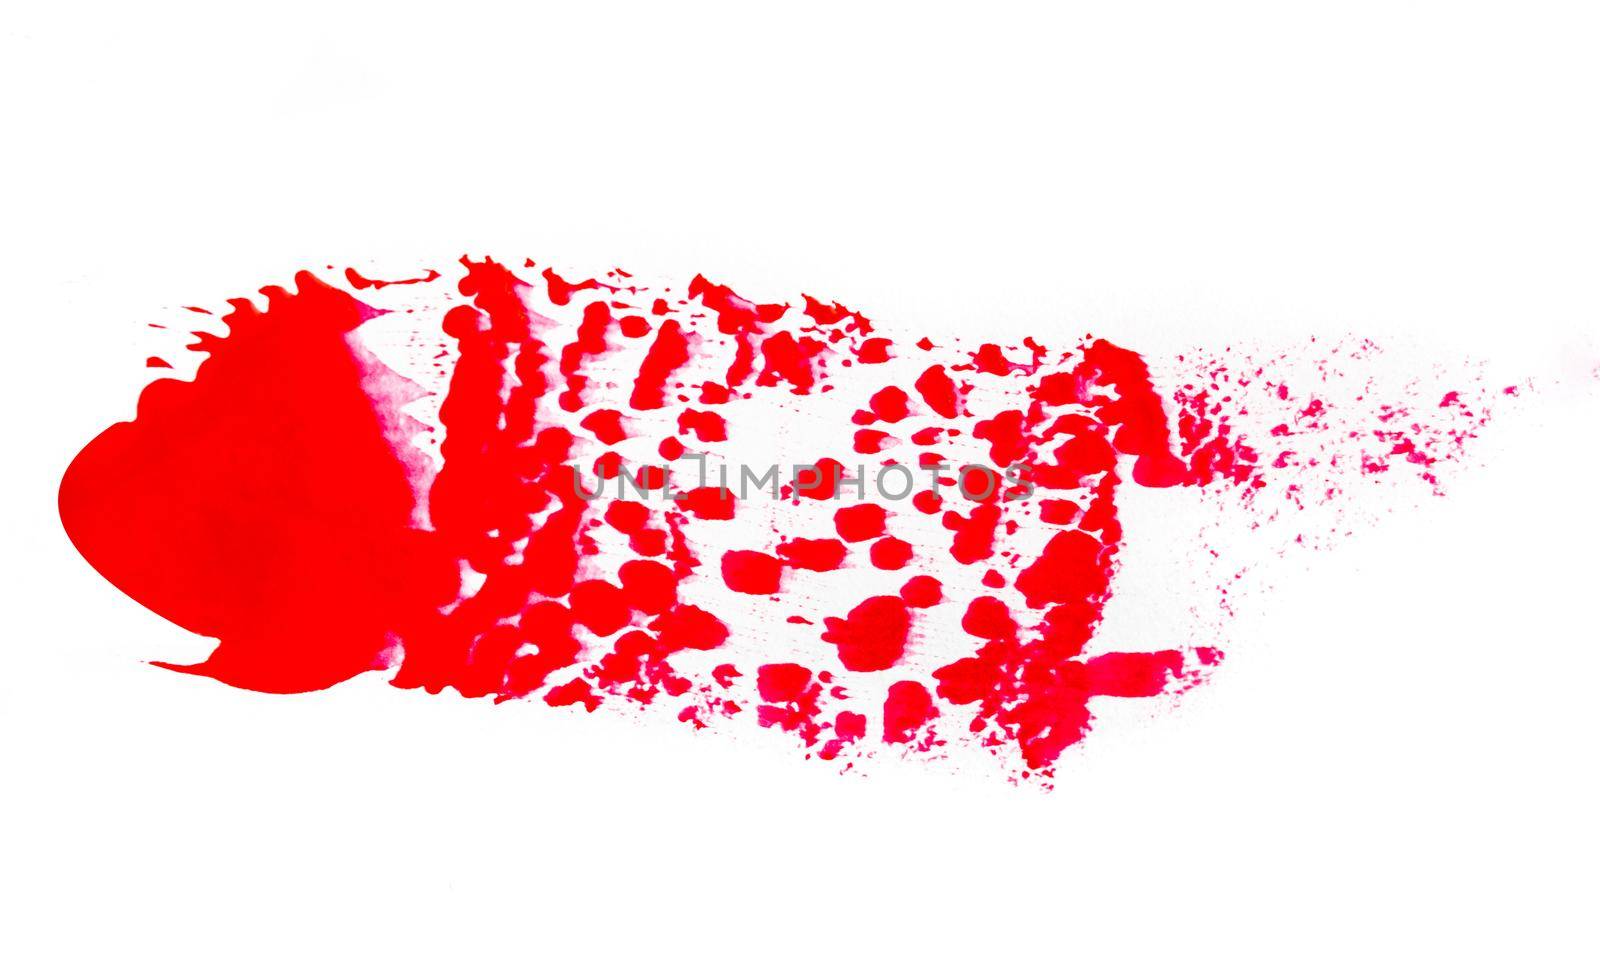 Bright red spills by GekaSkr